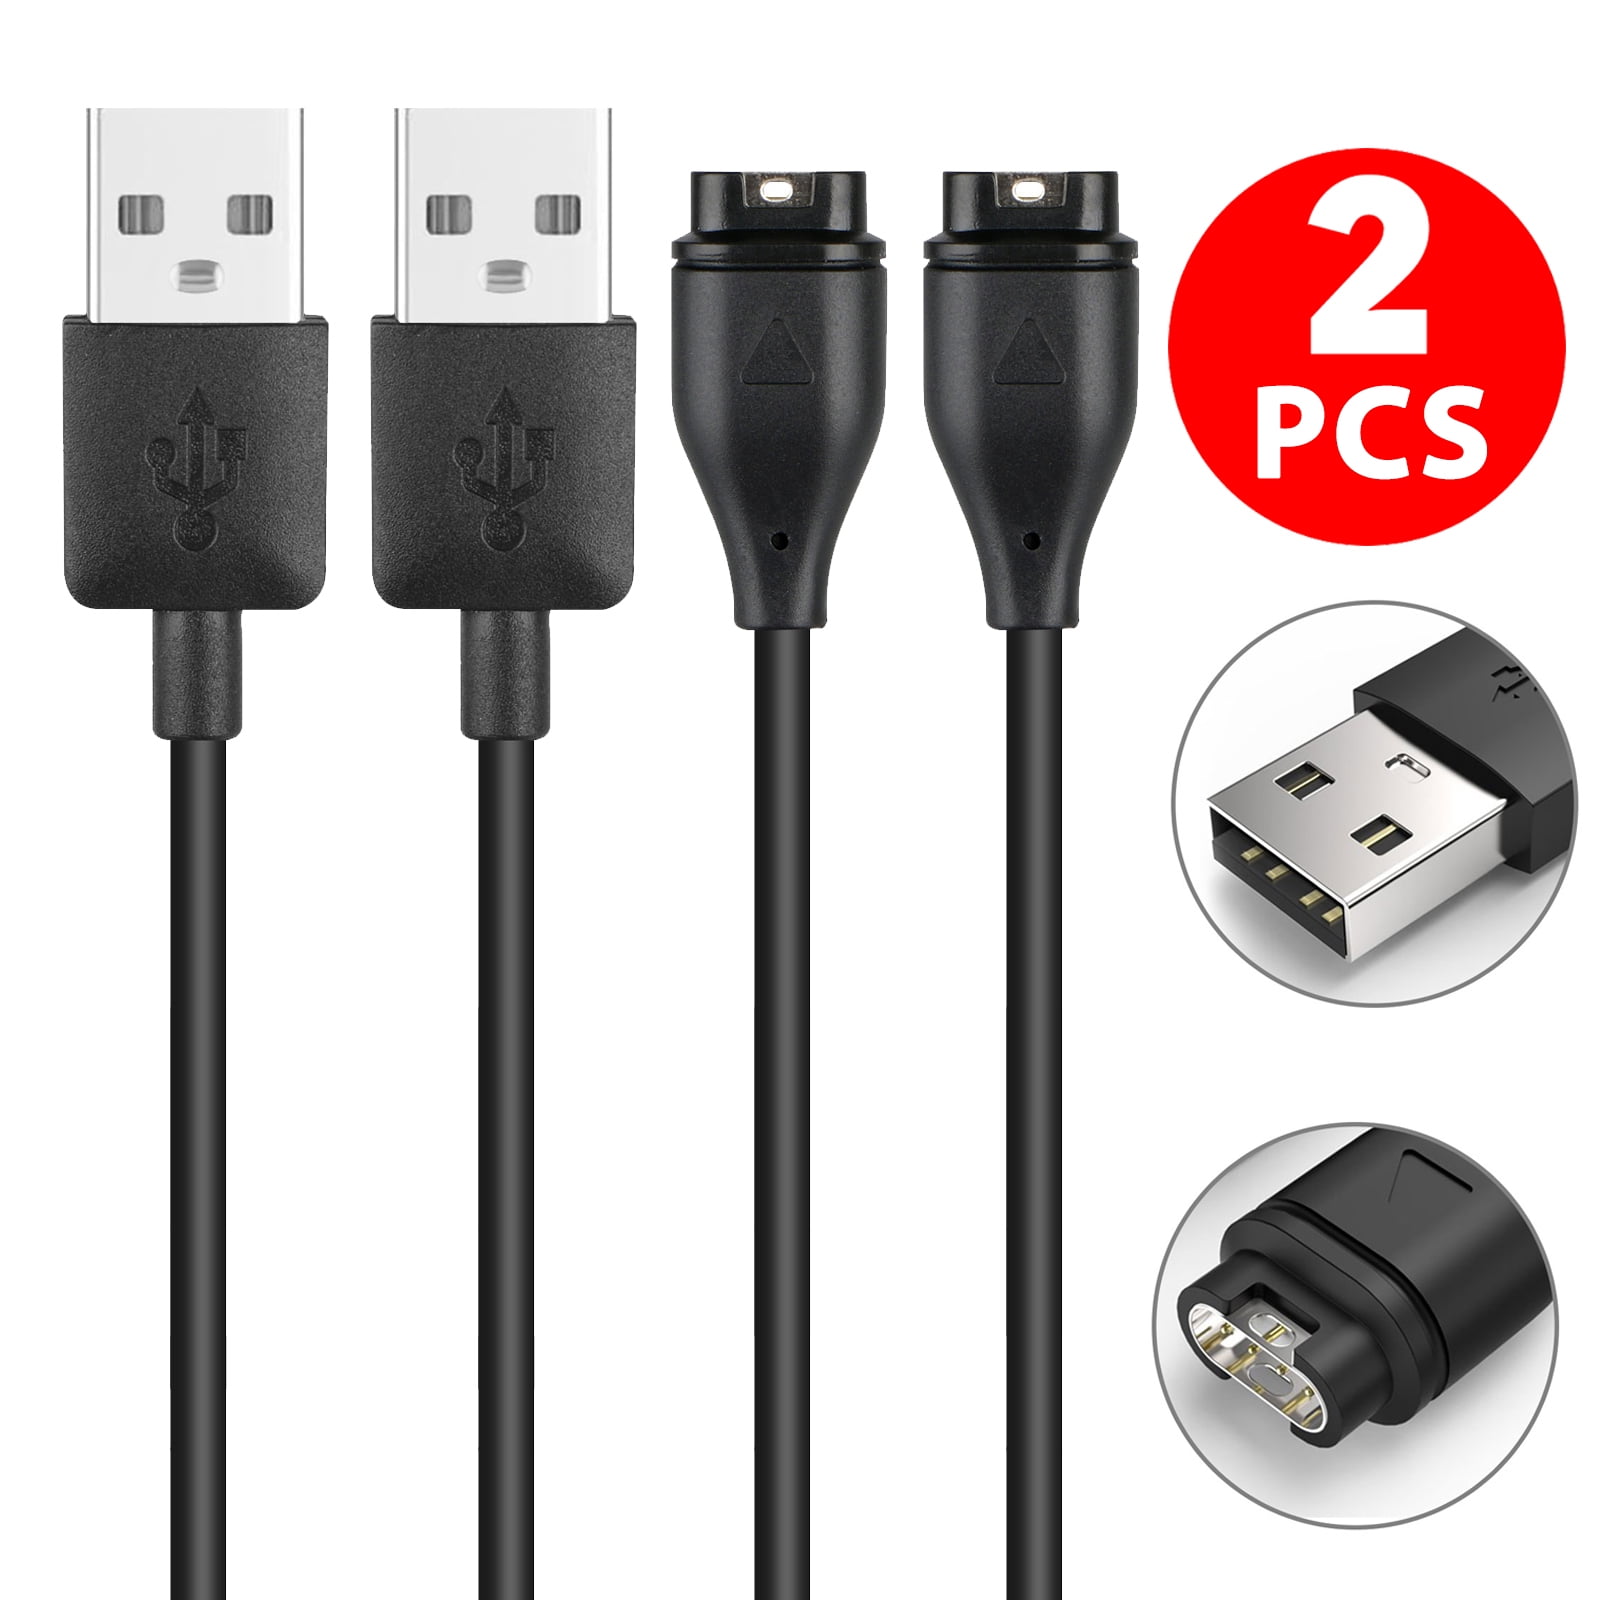 SG_USB charger charging cable cord for fenix 5/5S/5X vivoactive 3 vivosp NSNE 